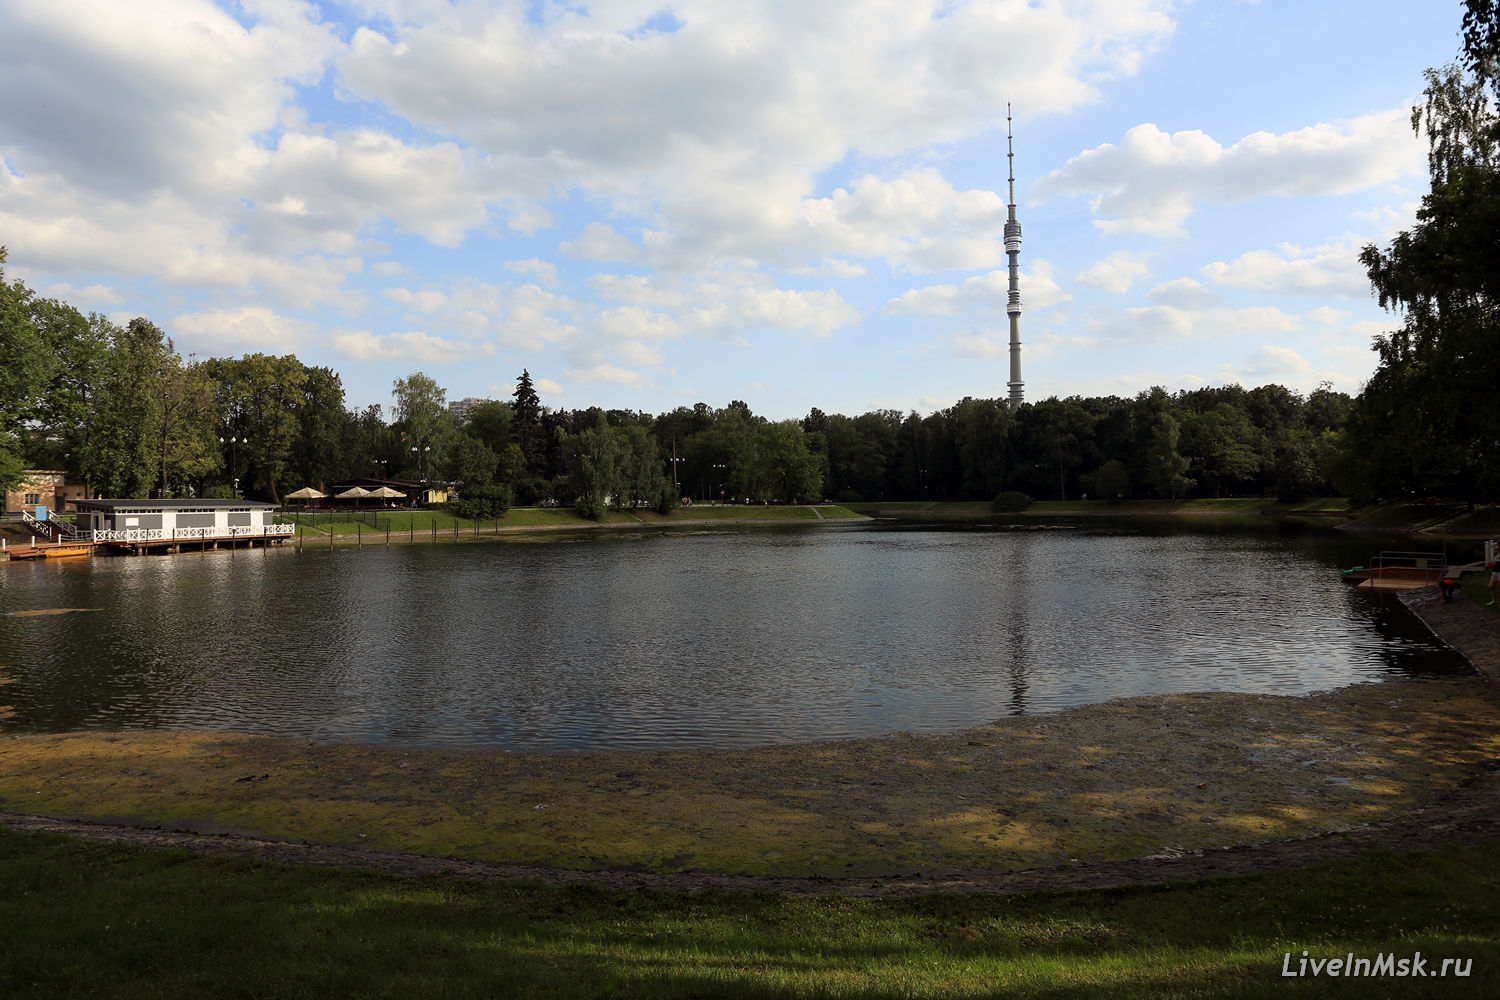 Останкинский парк, фото 2013 года